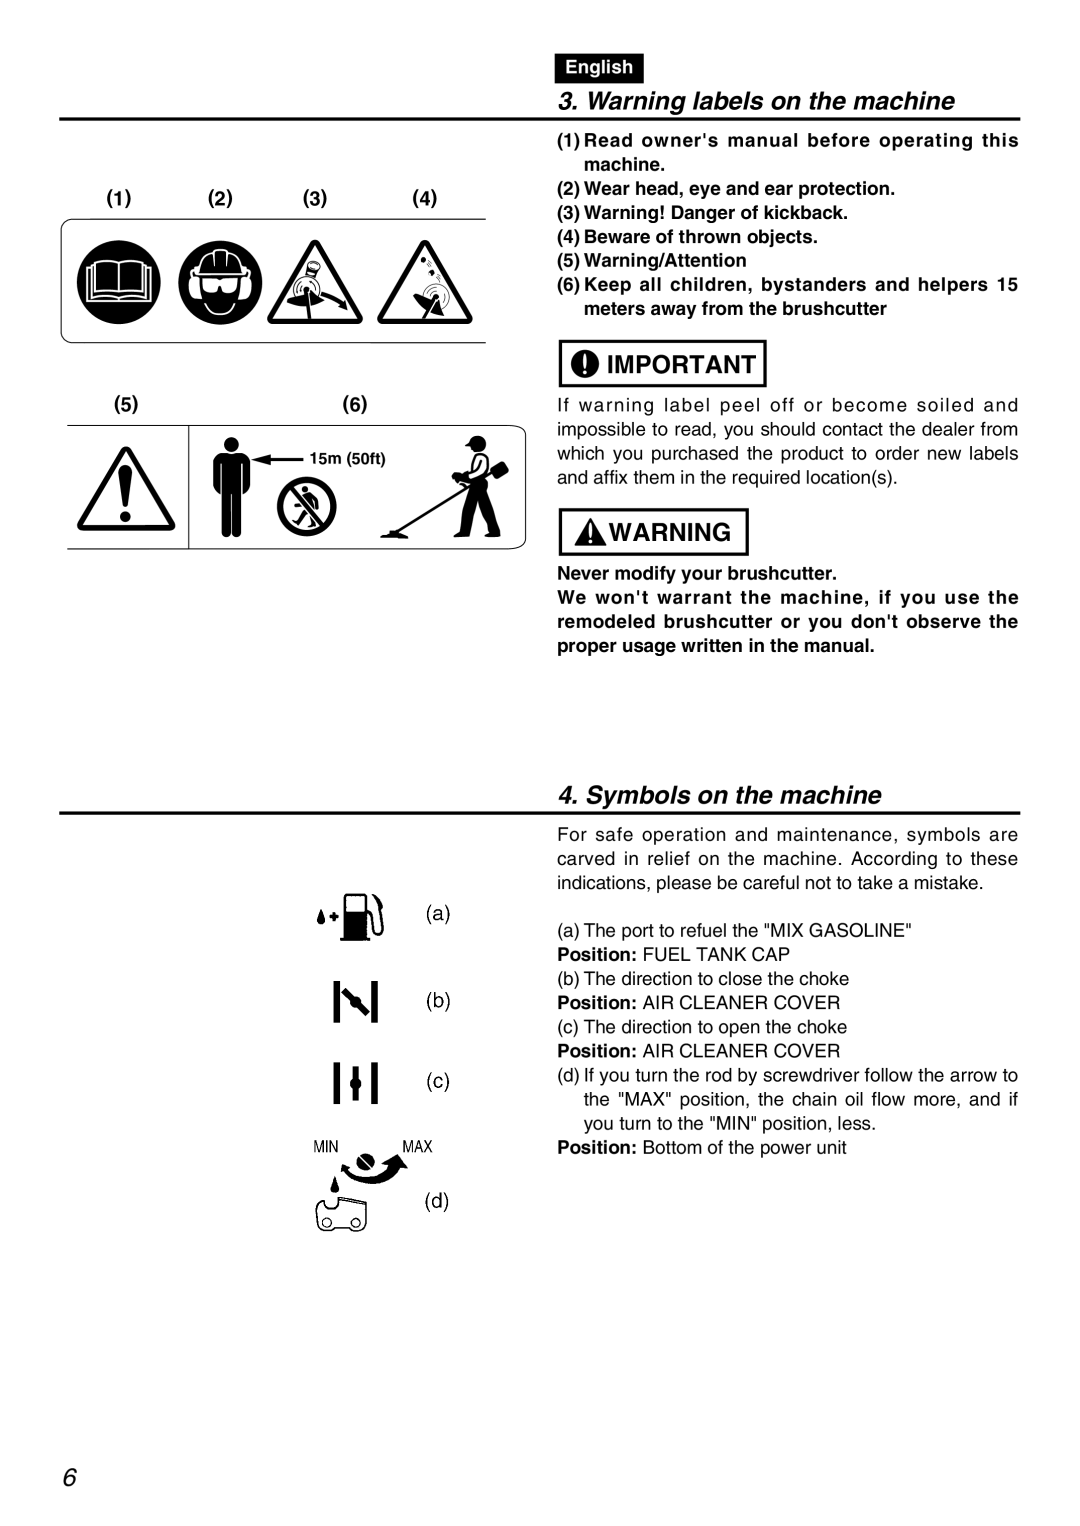 Zenoah PSZ2401 manual Warning labels on the machine, Symbols on the machine, 1 2 3, English 